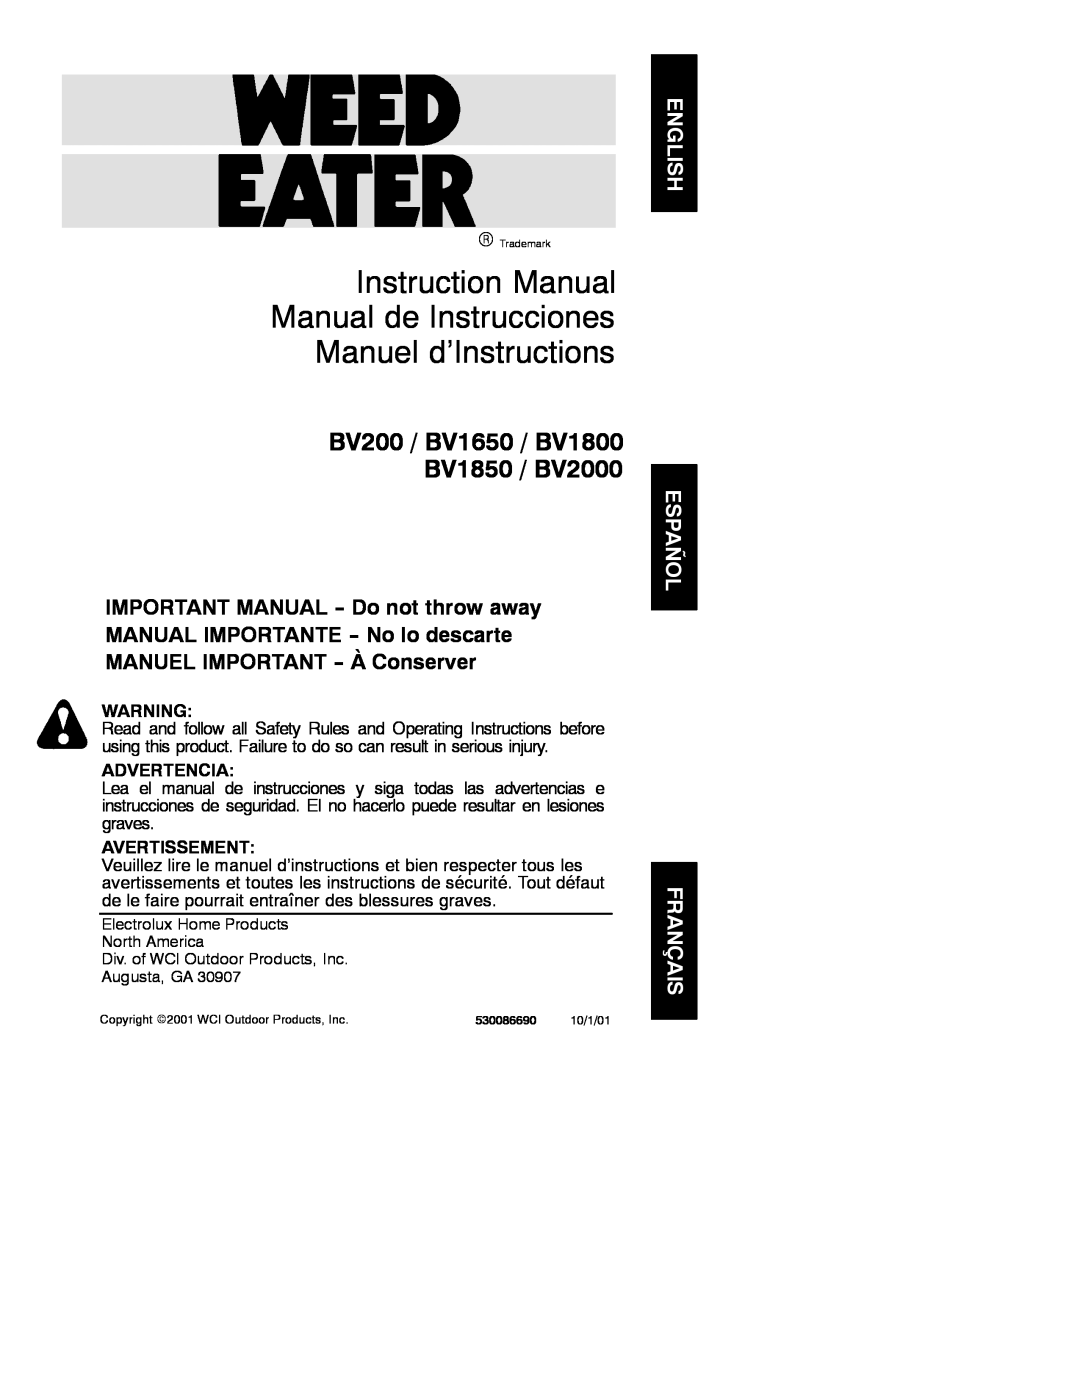 Weed Eater 530086690 instruction manual BV200 / BV1650 / BV1800 BV1850 / BV2000, Advertencia, Avertissement 